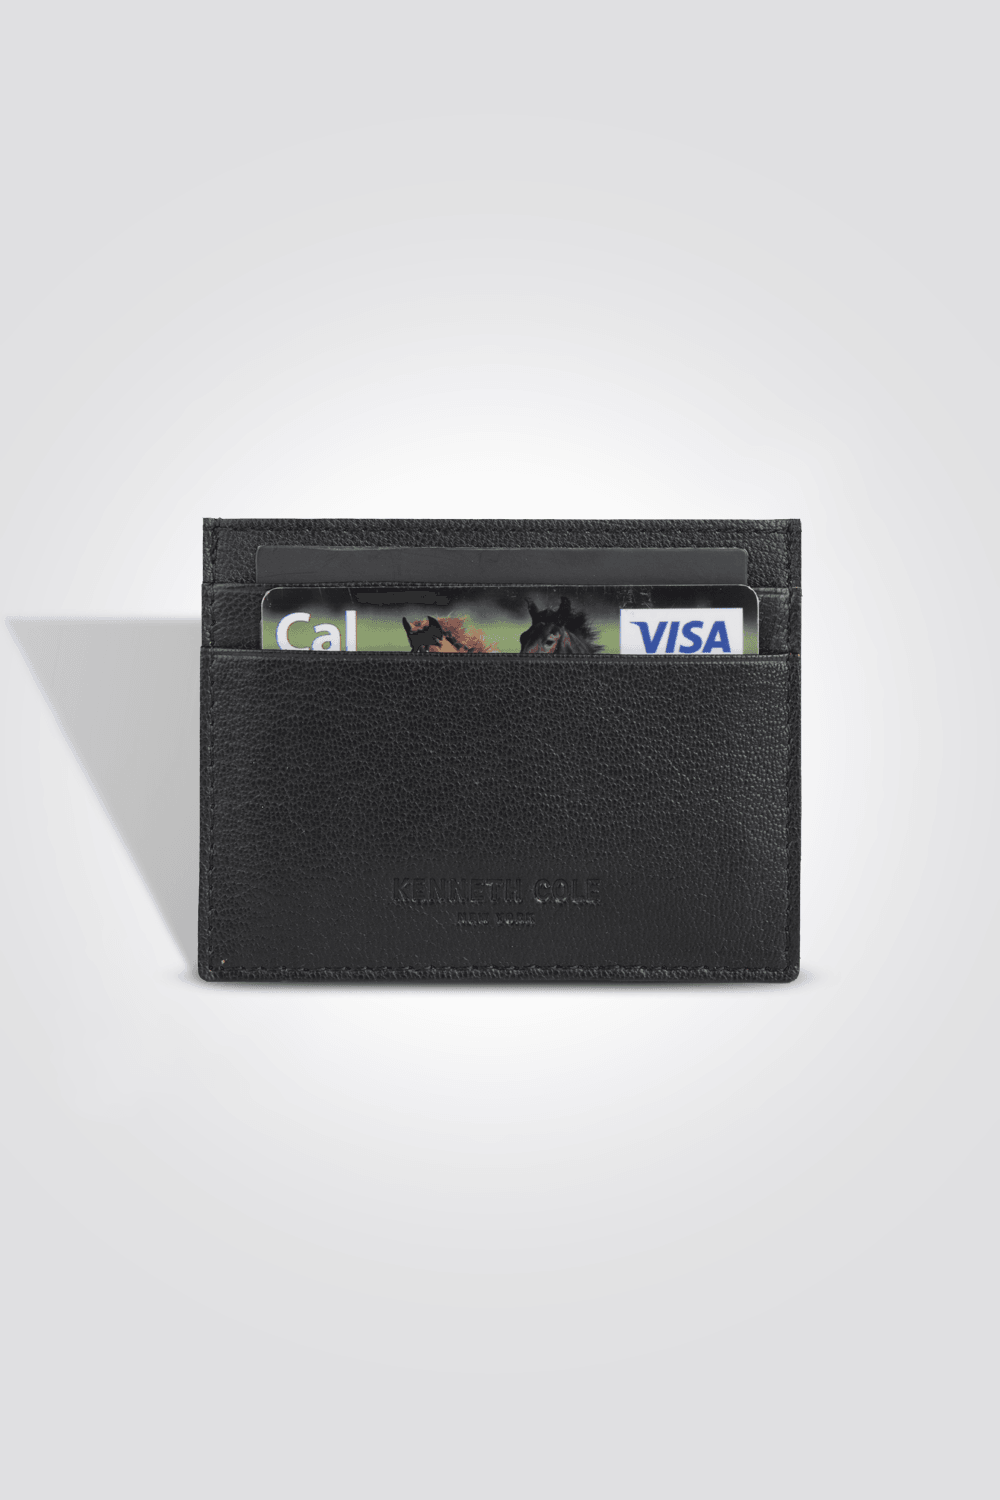 KENNETH COLE - ארנק אשראי עור בצבע שחור - MASHBIR//365